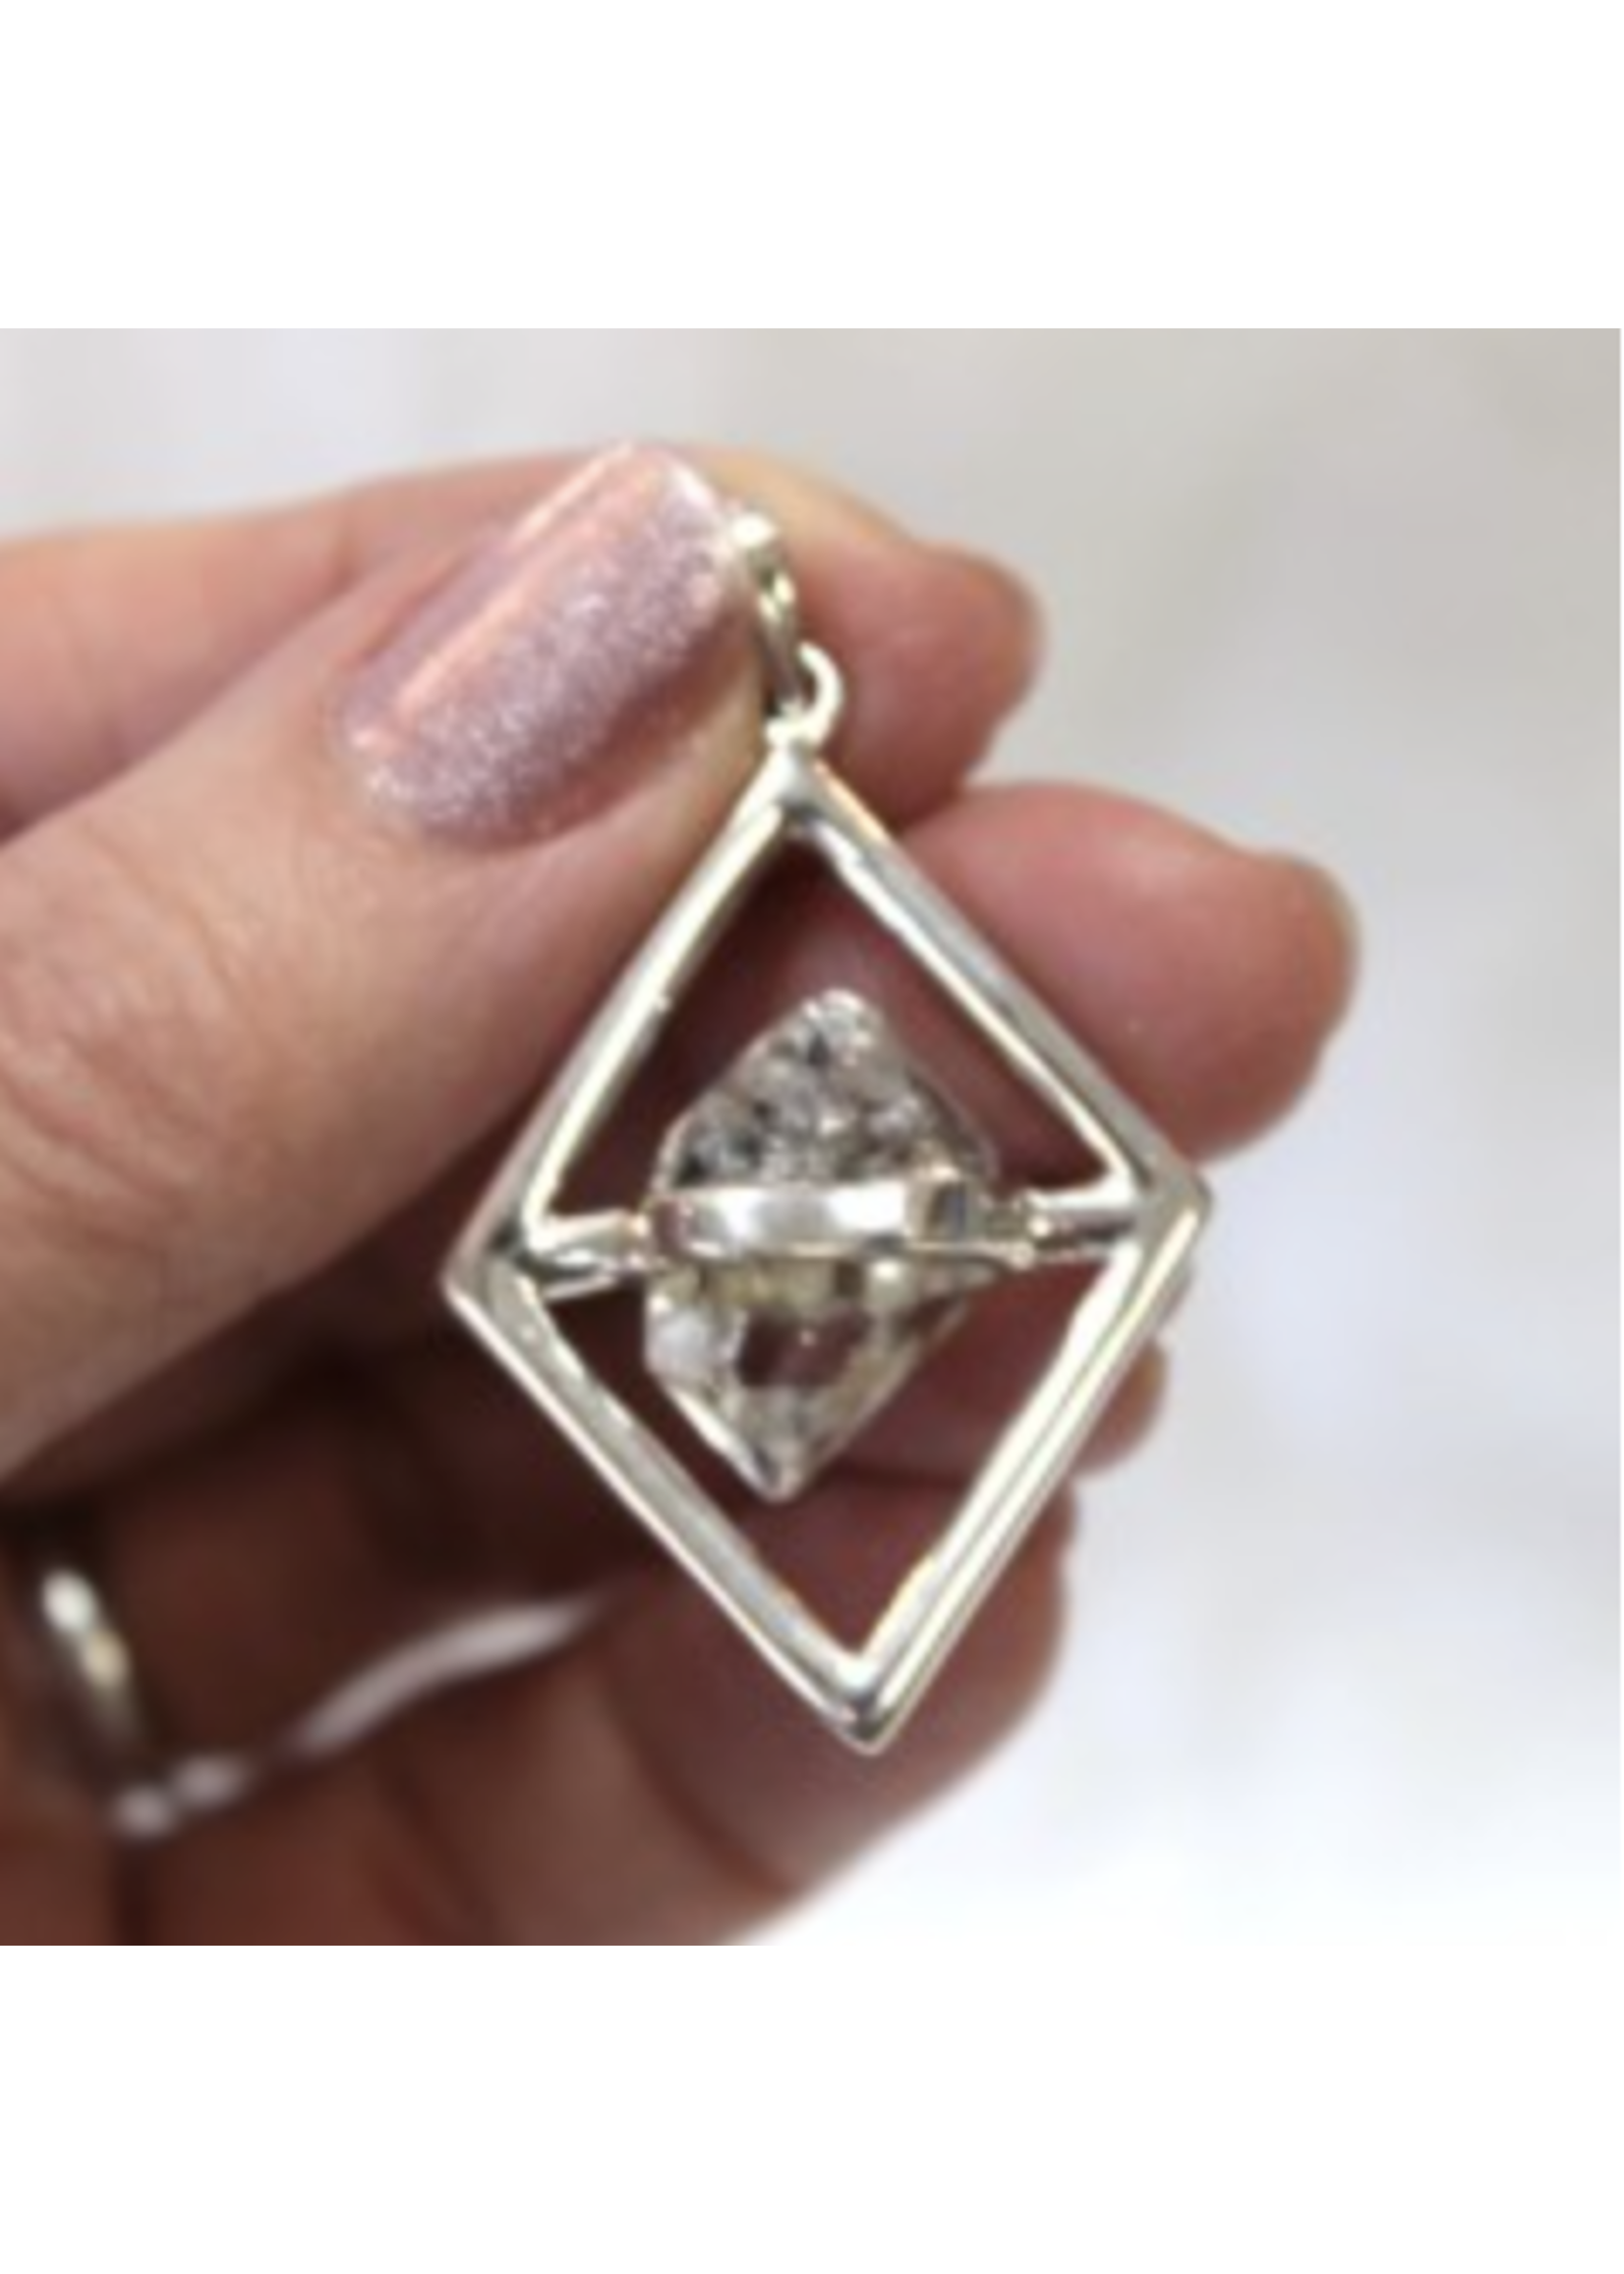 Herkimer Diamond Pendants